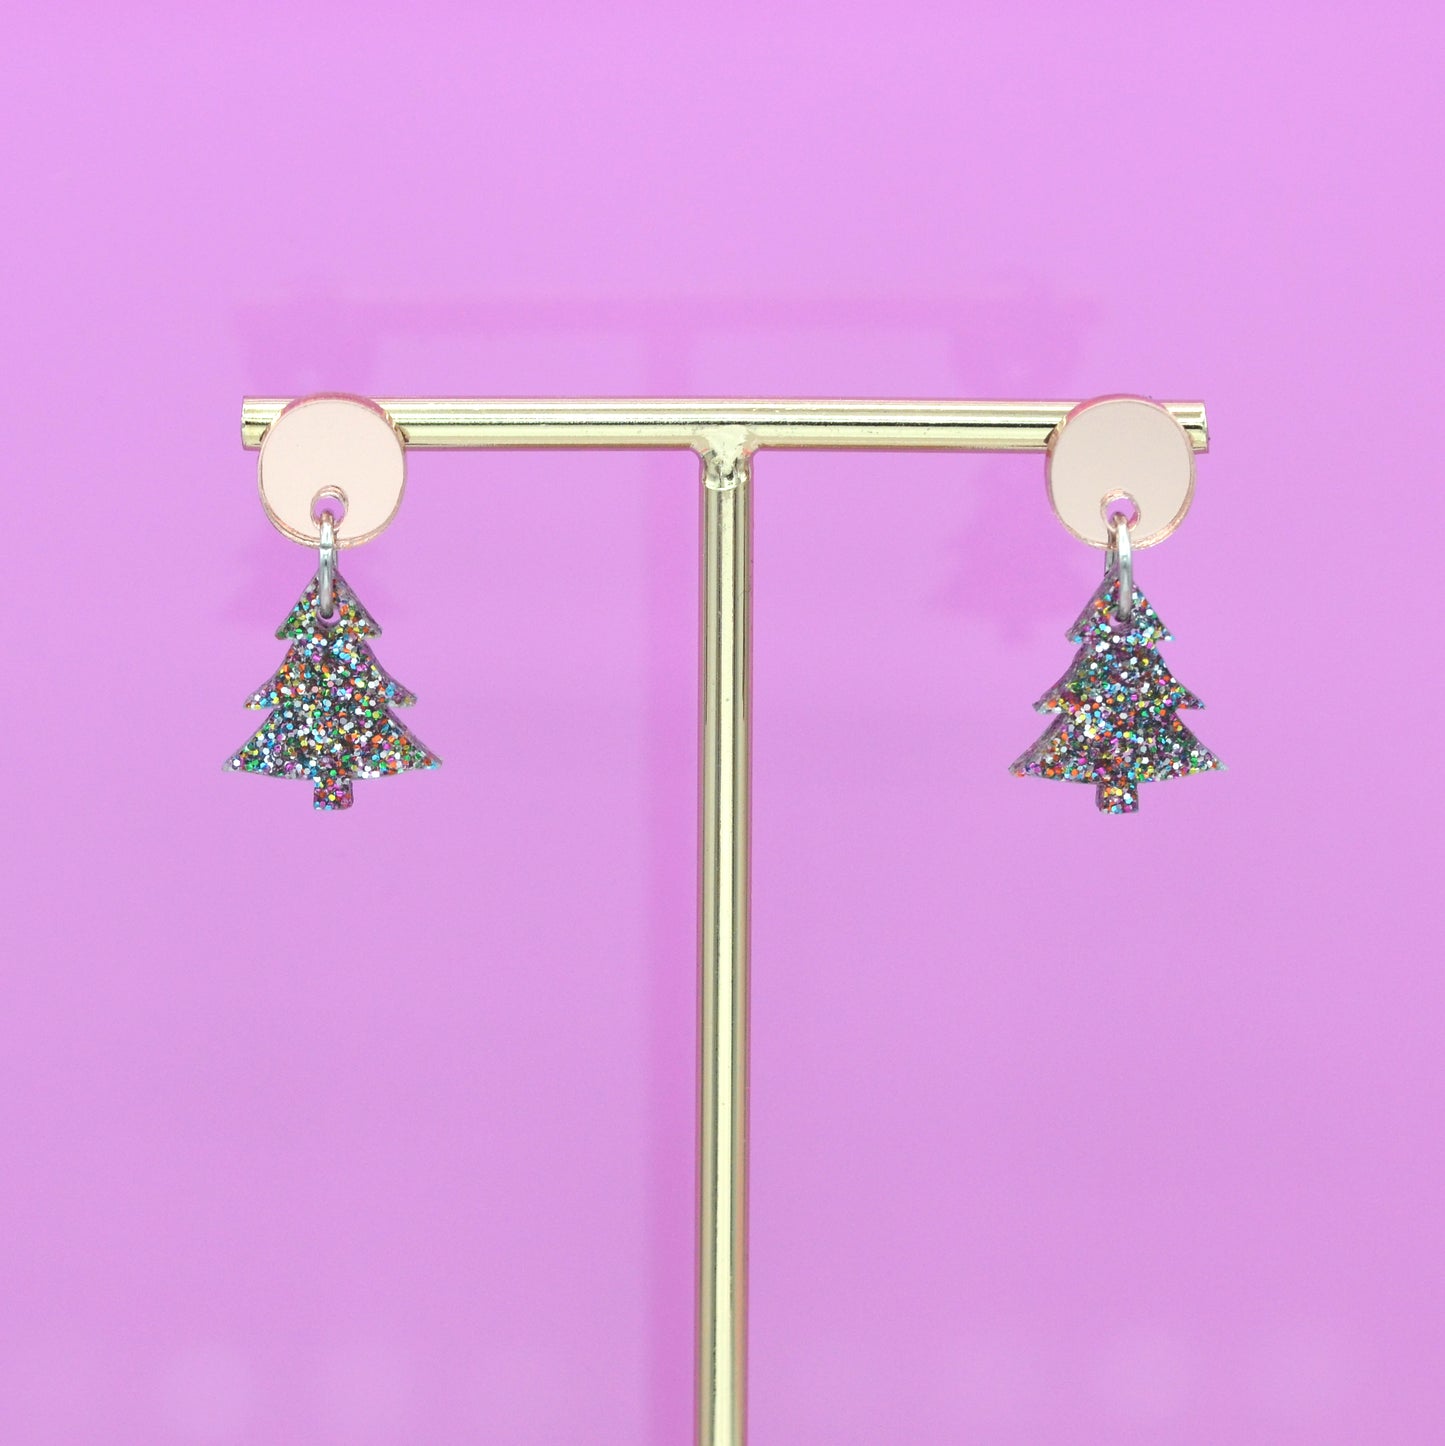 Festive Glitter & Mirror Acrylic Christmas Tree Charm Dangle Earrings